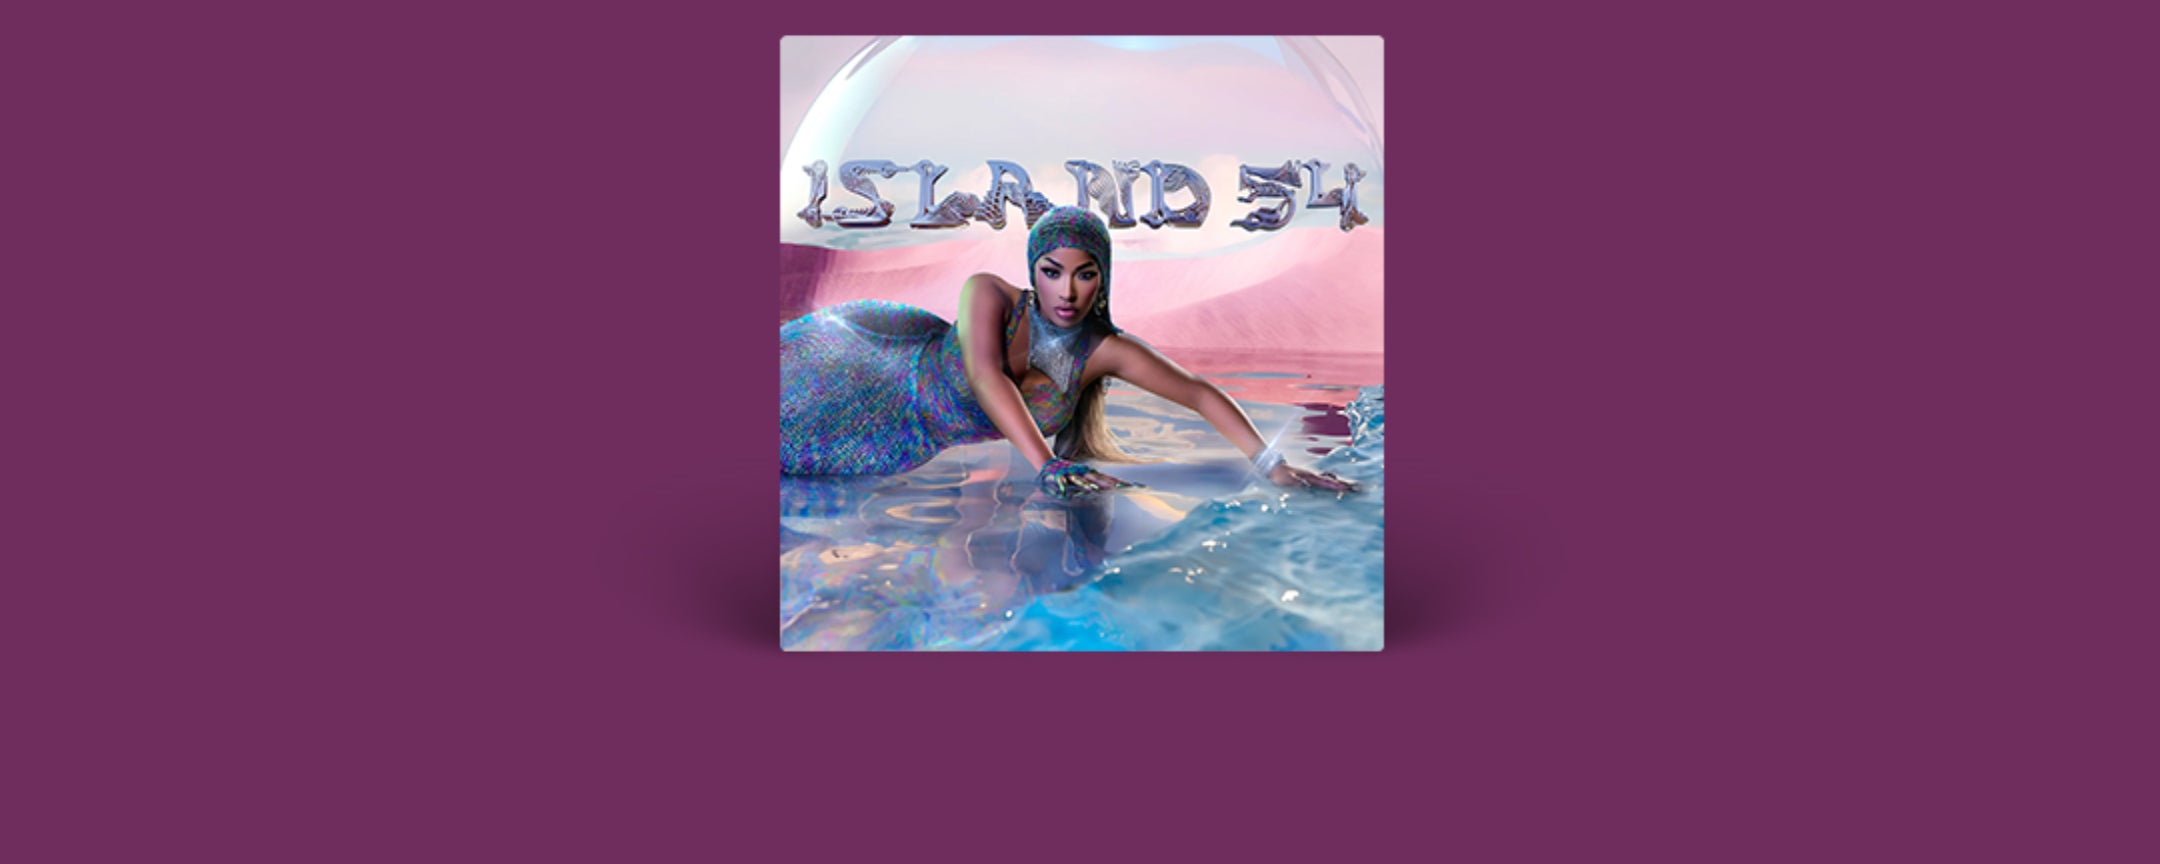 Island 54 (Intro)